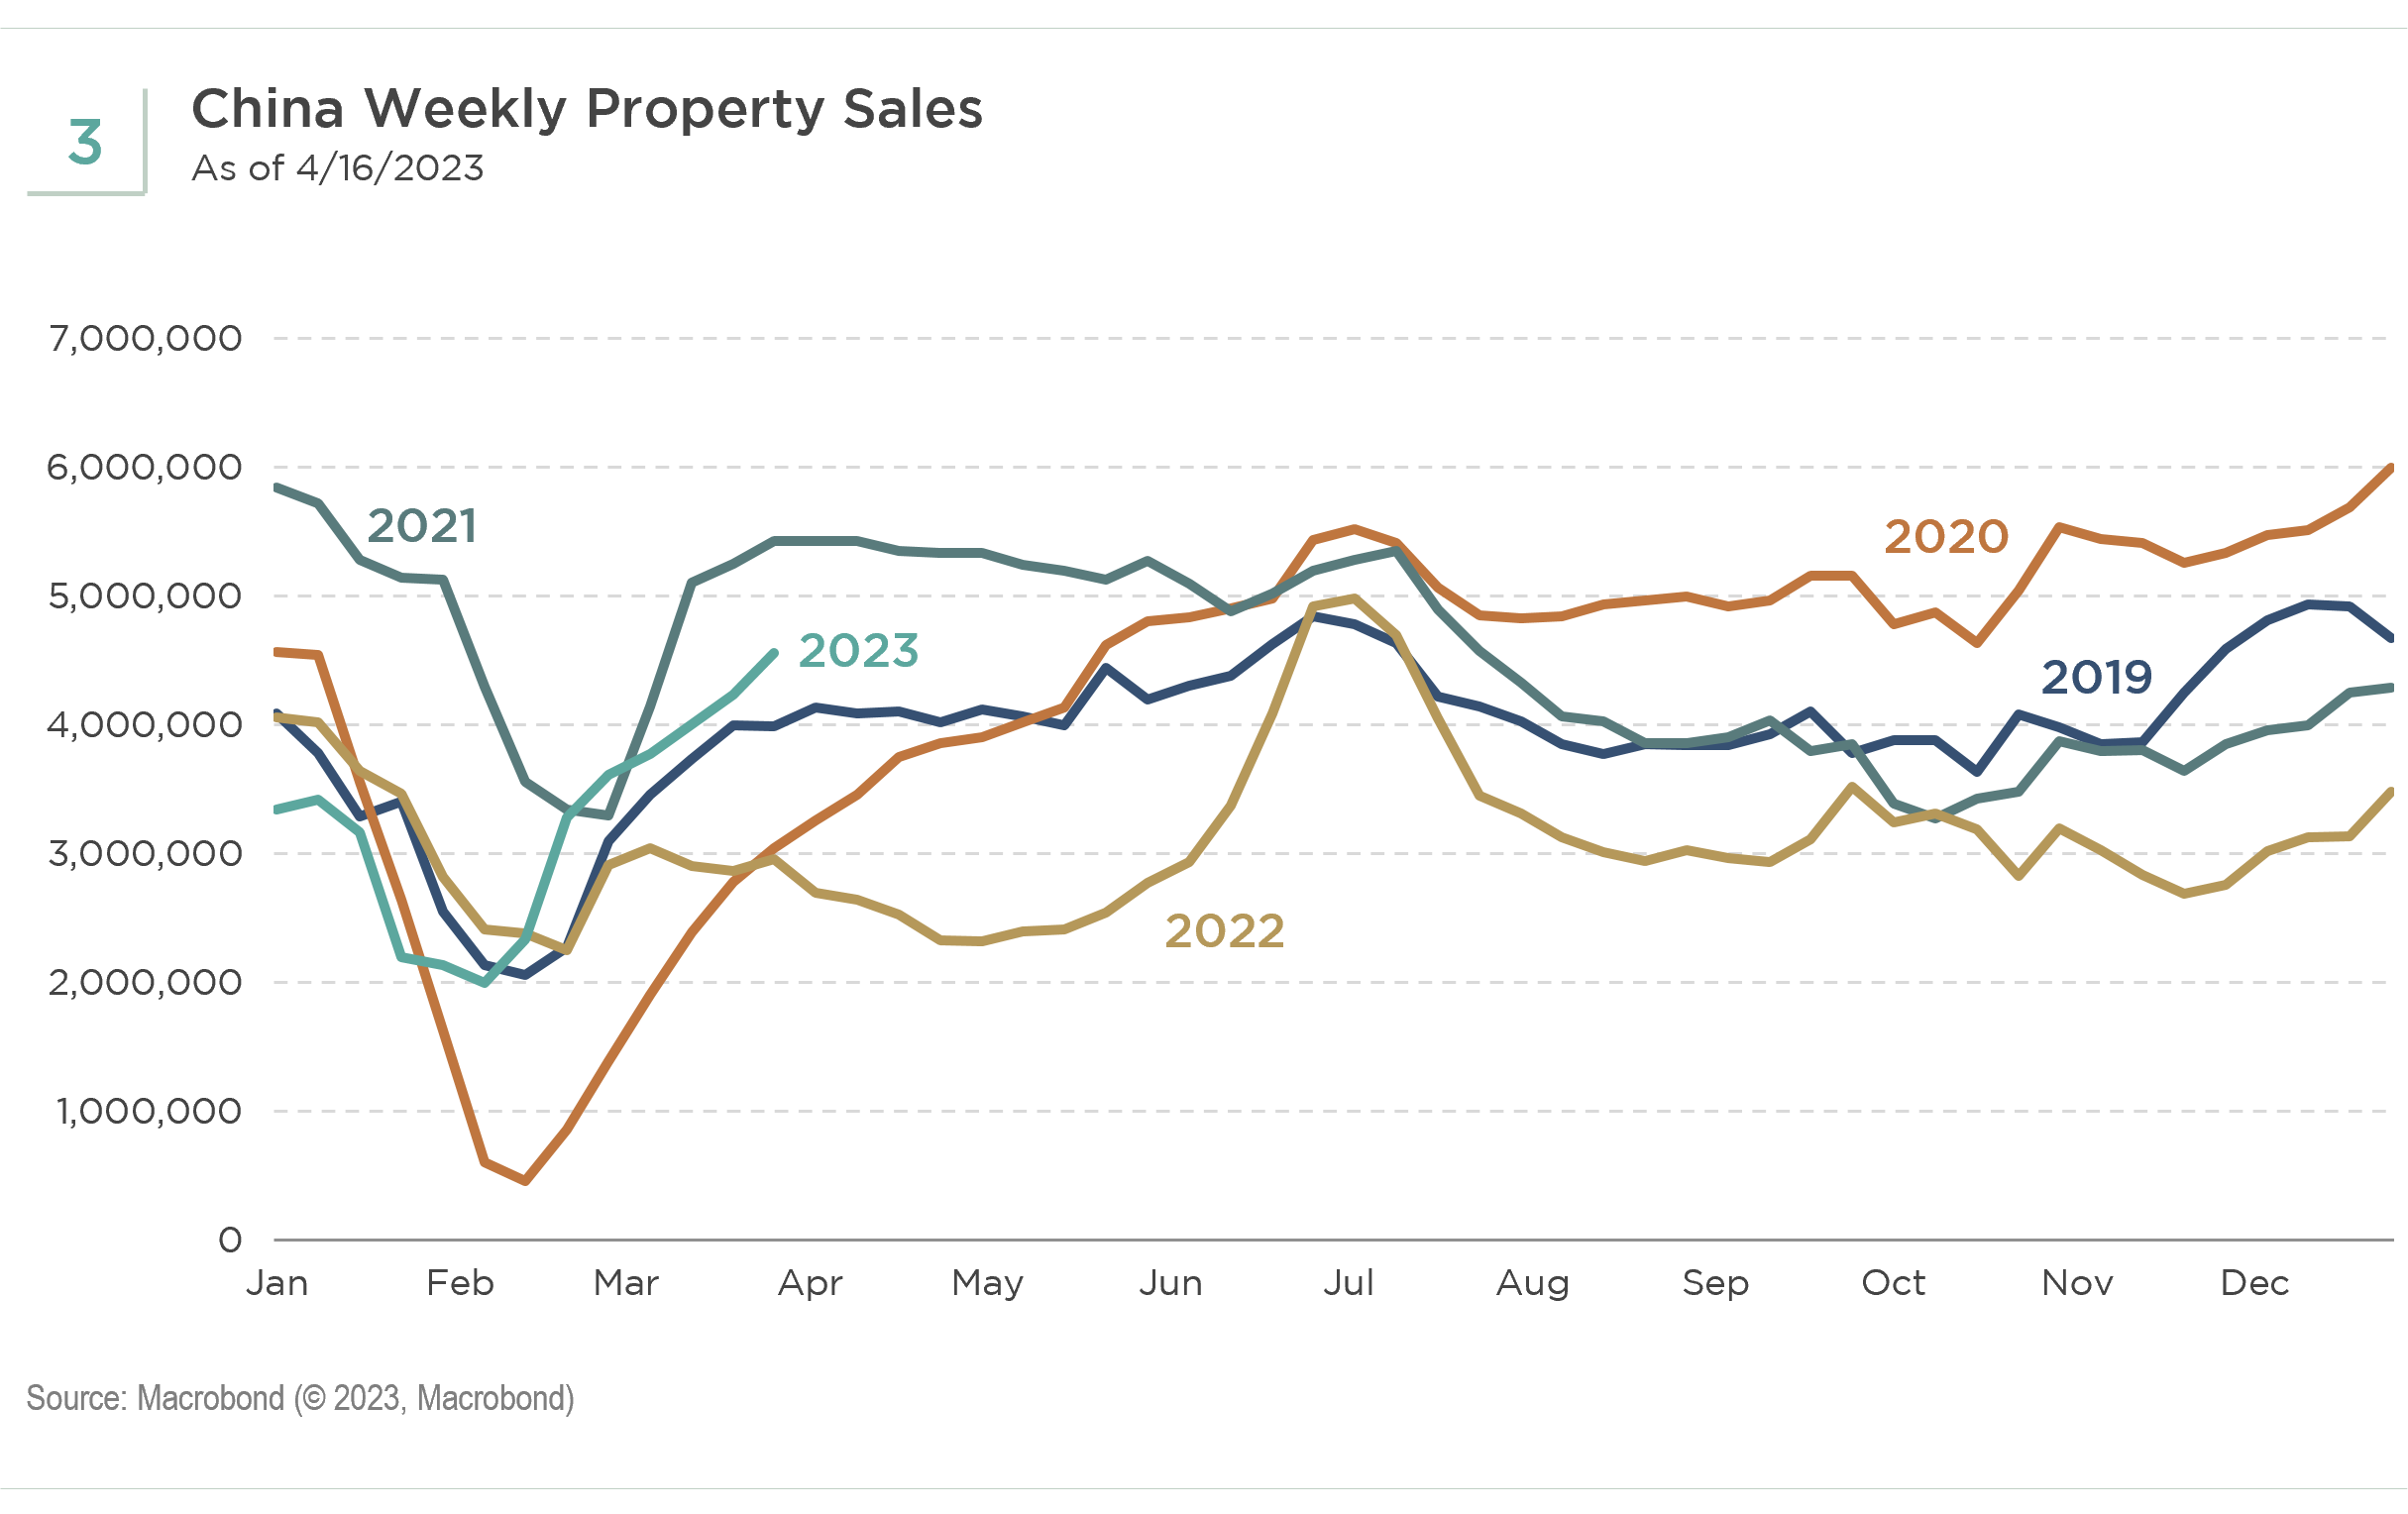 Exhibit 3: China Weekly Property Sales